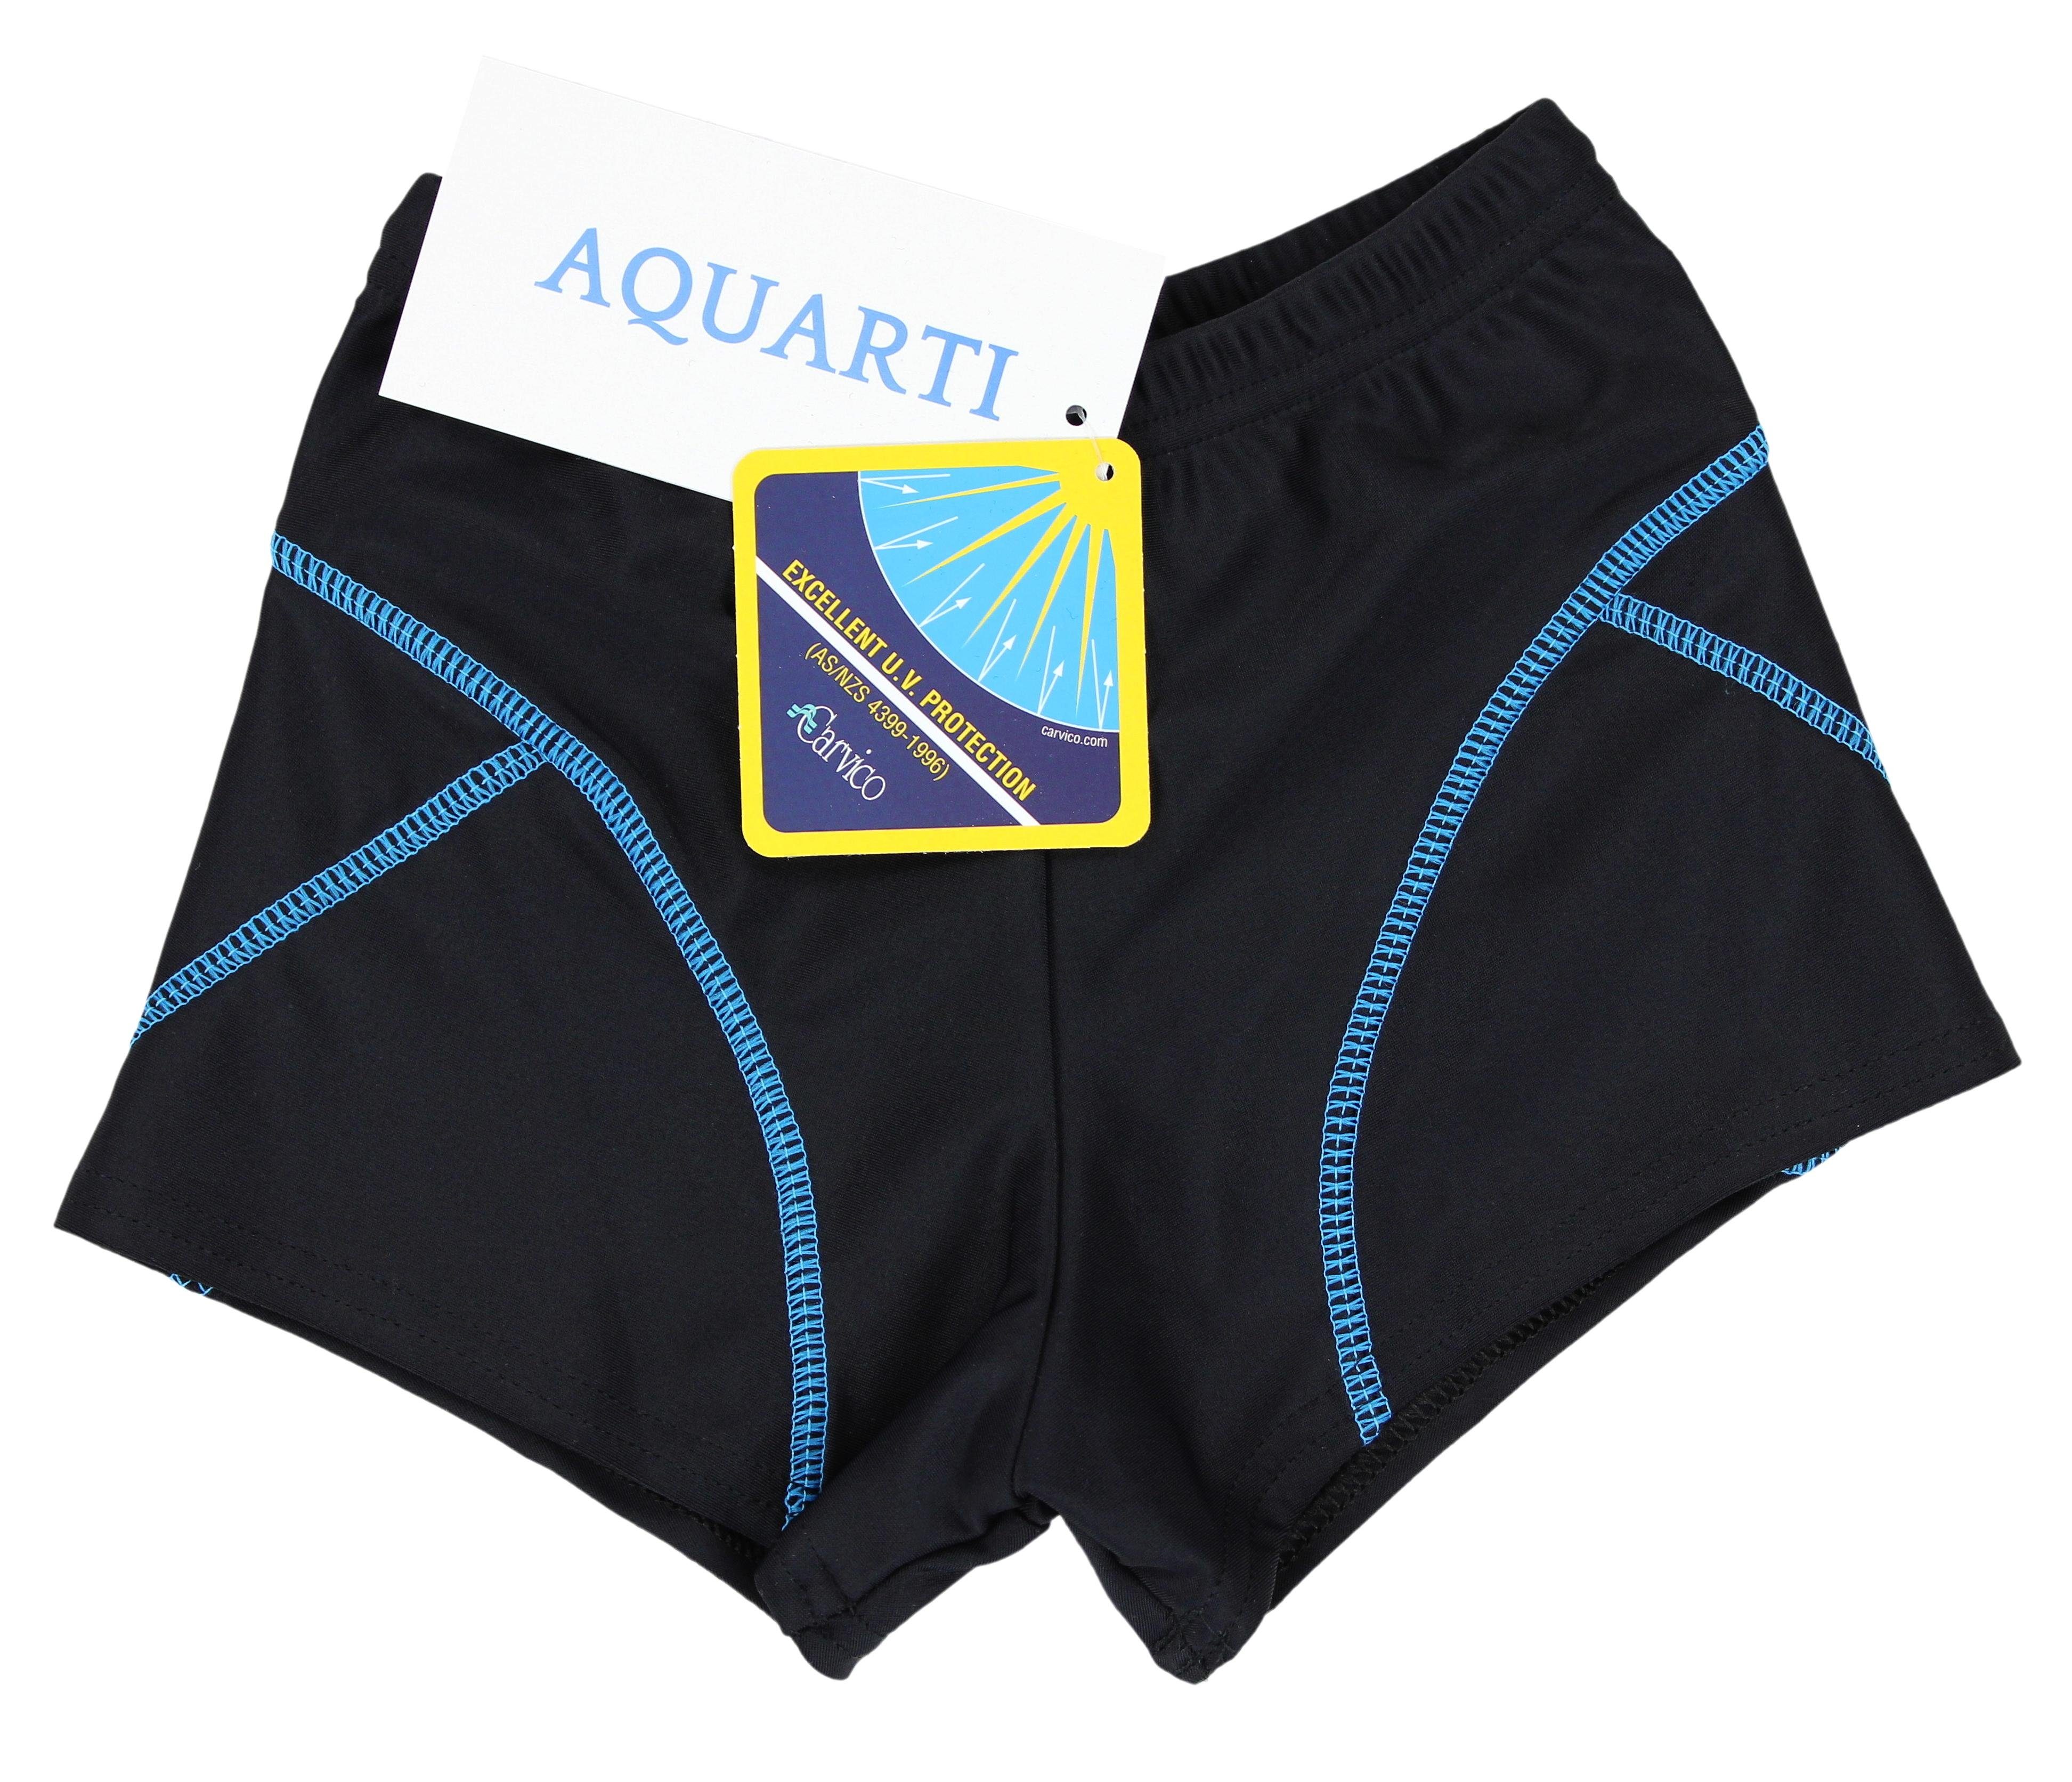 Aquarti Aquarti Türkis Nähte Badehose Jungen kontrastfarbene Schwimmhose / Schwarz Badehose